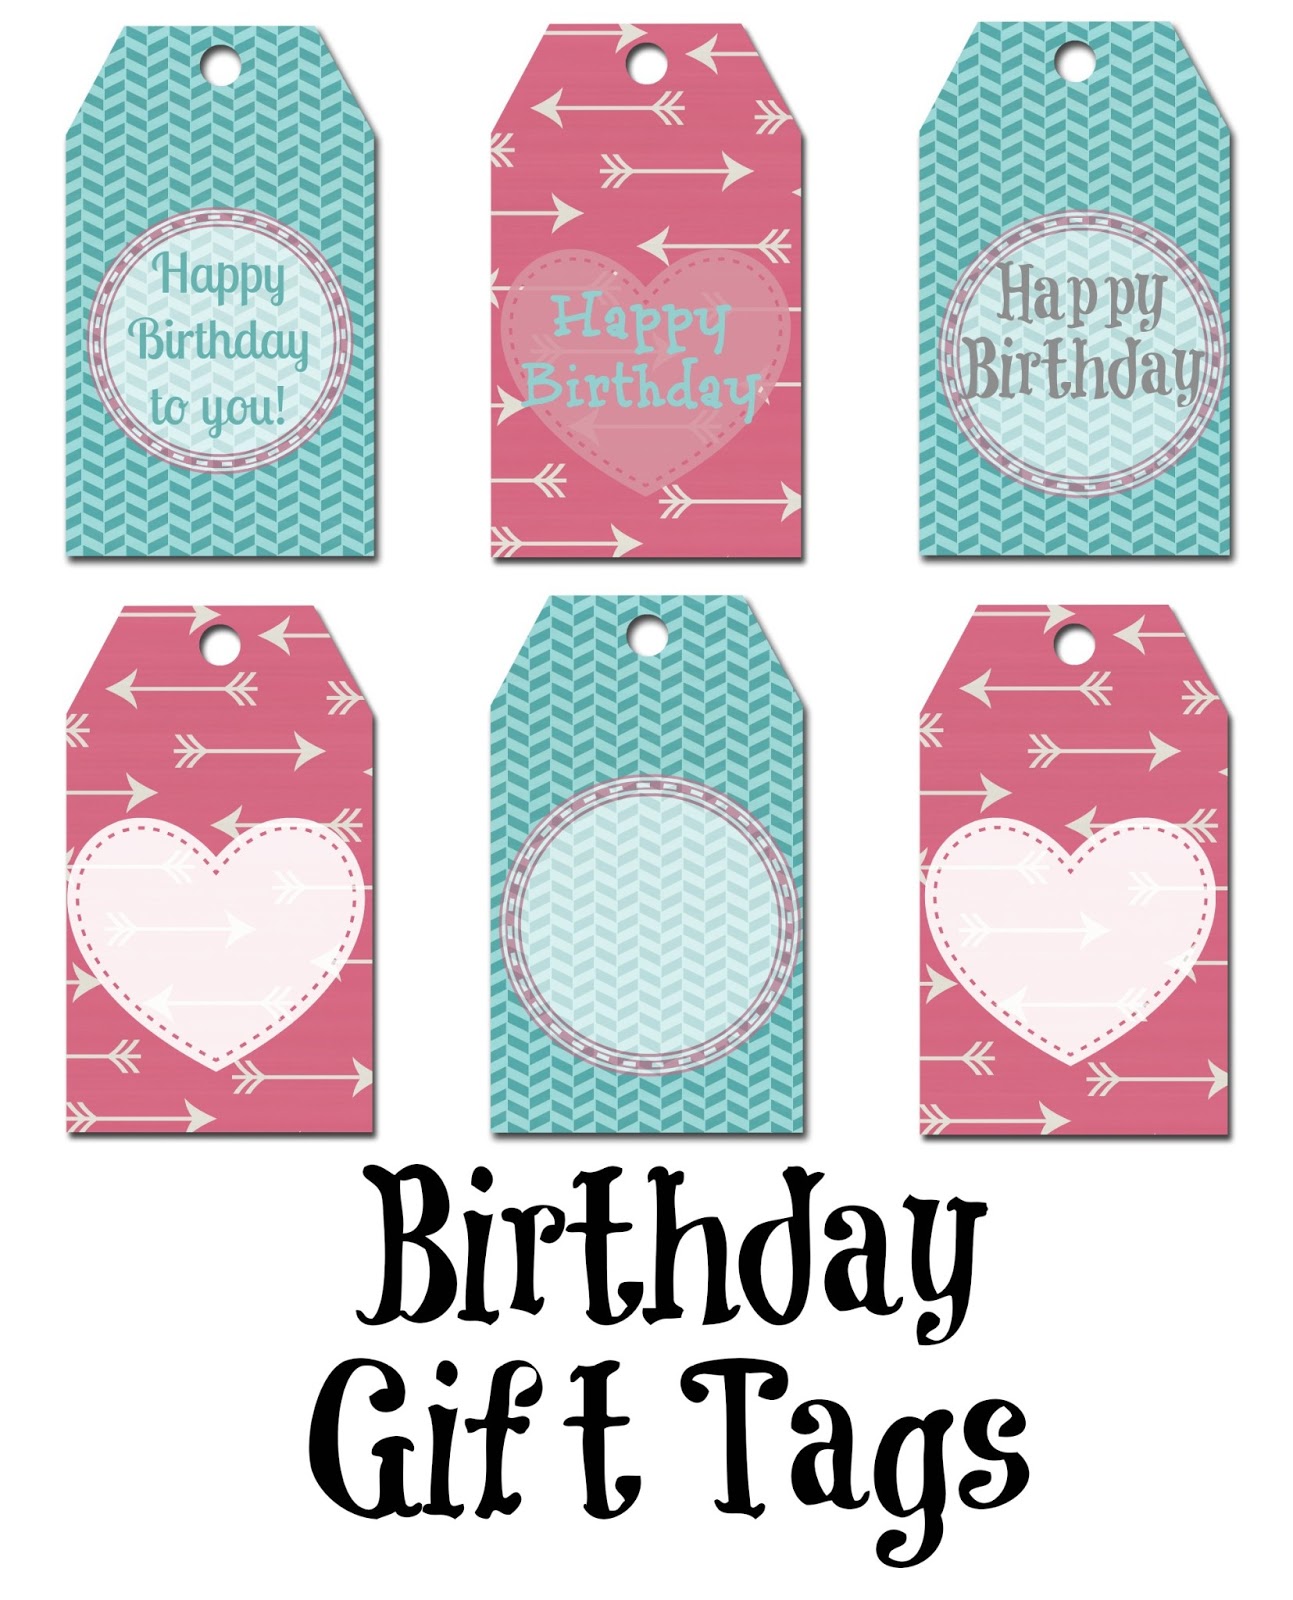 happy-birthday-gift-tag-birthday-gift-tags-birthday-gift-tags-printable-gift-tags